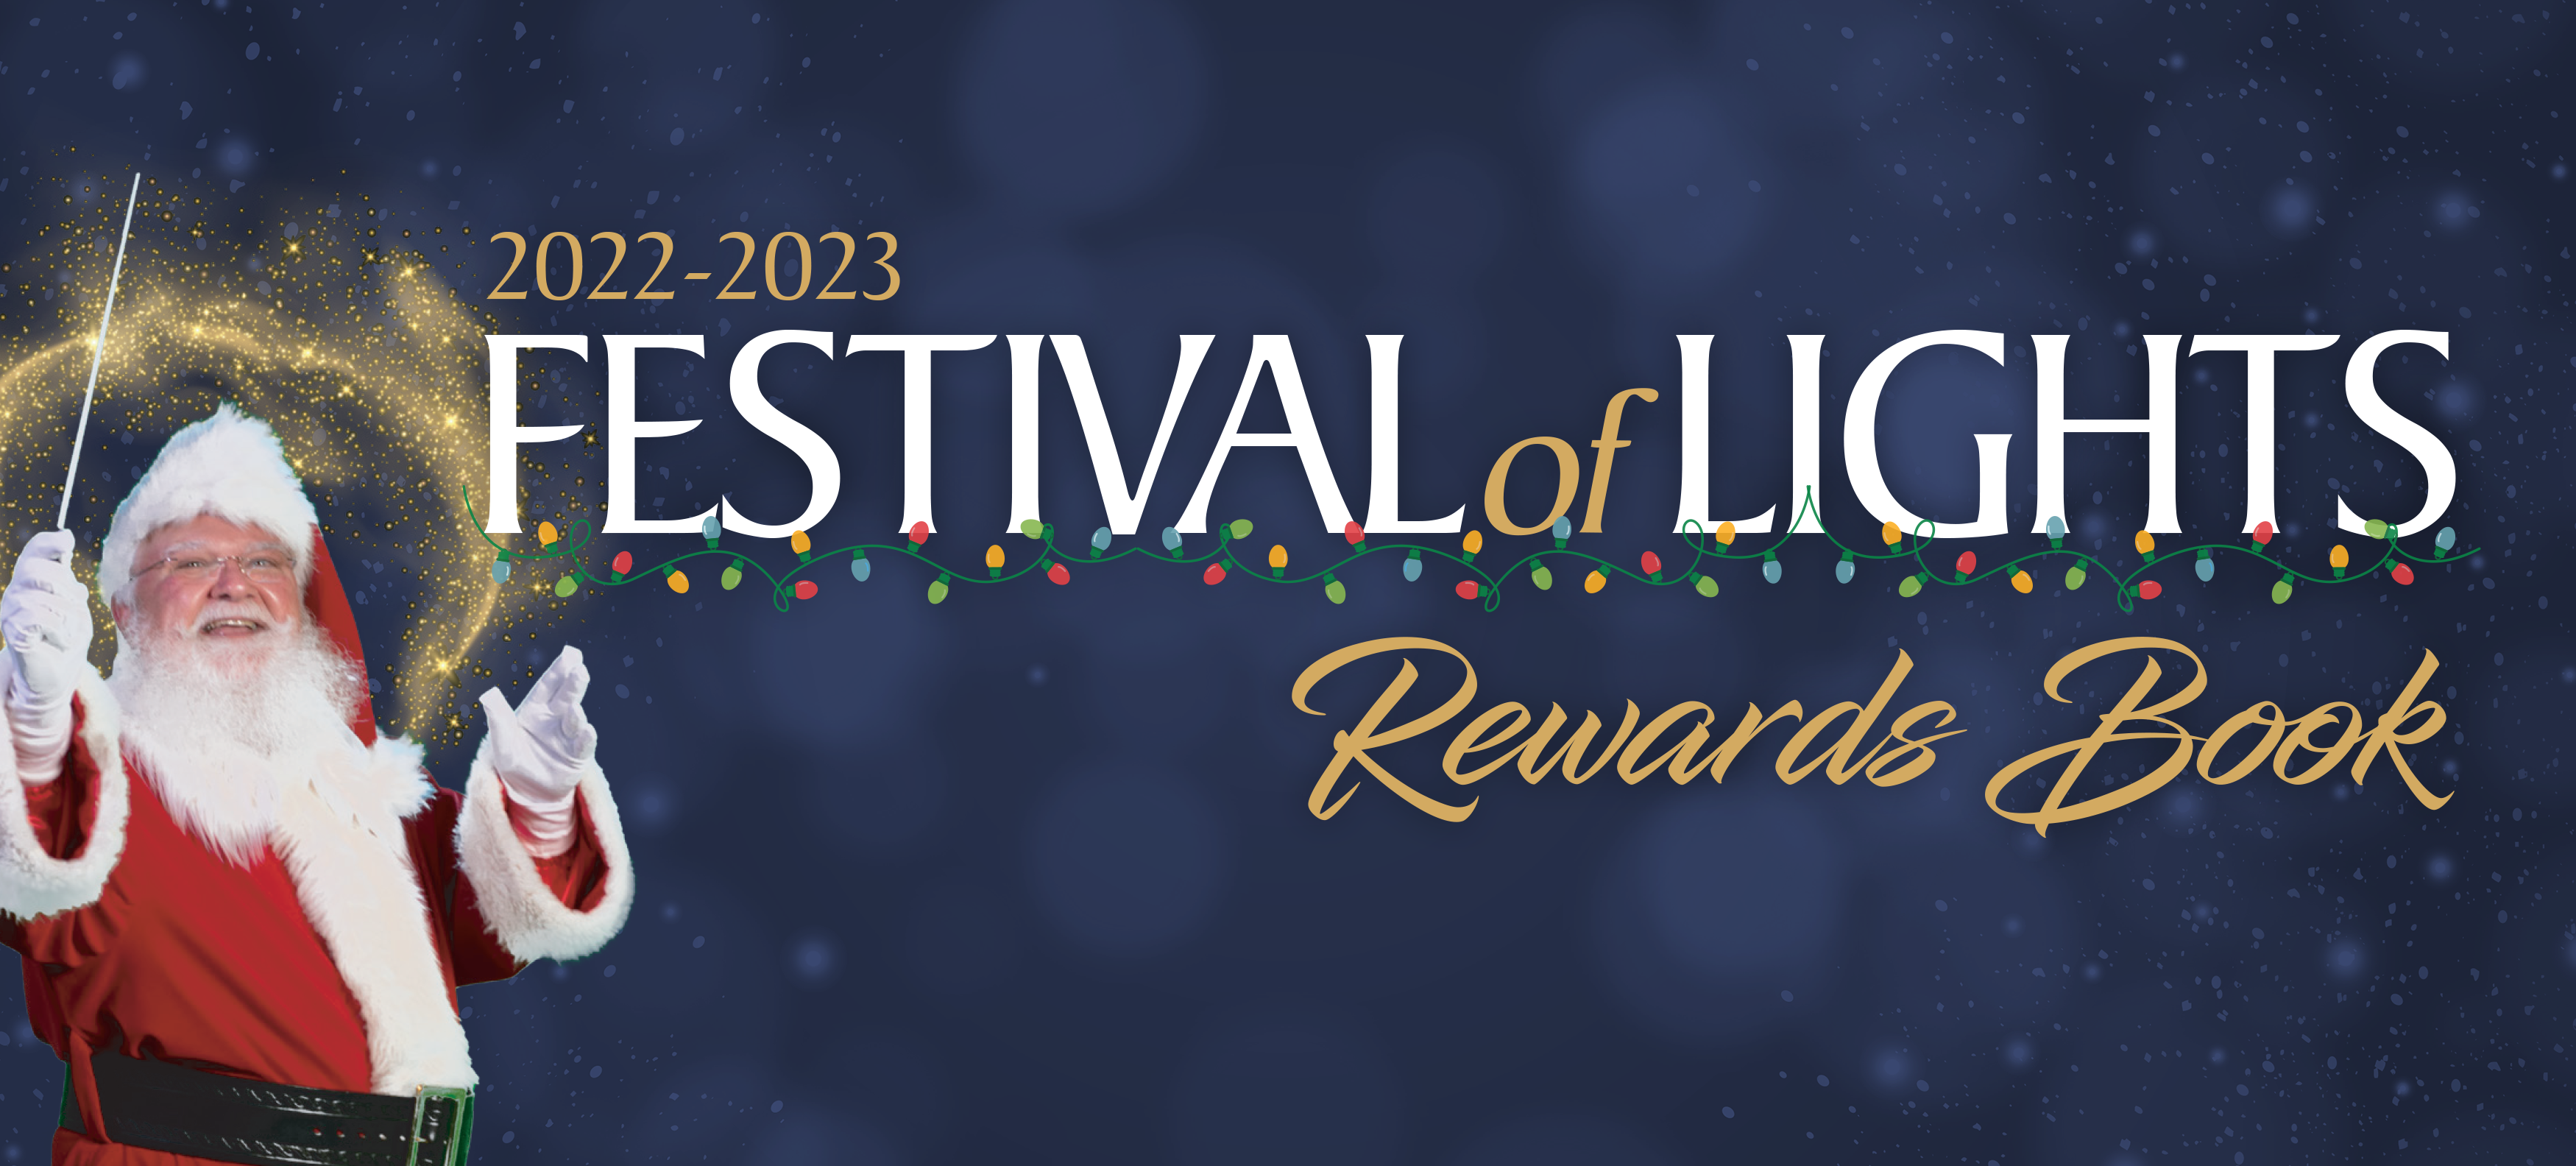 Festival of Lights Rewards Book header photo